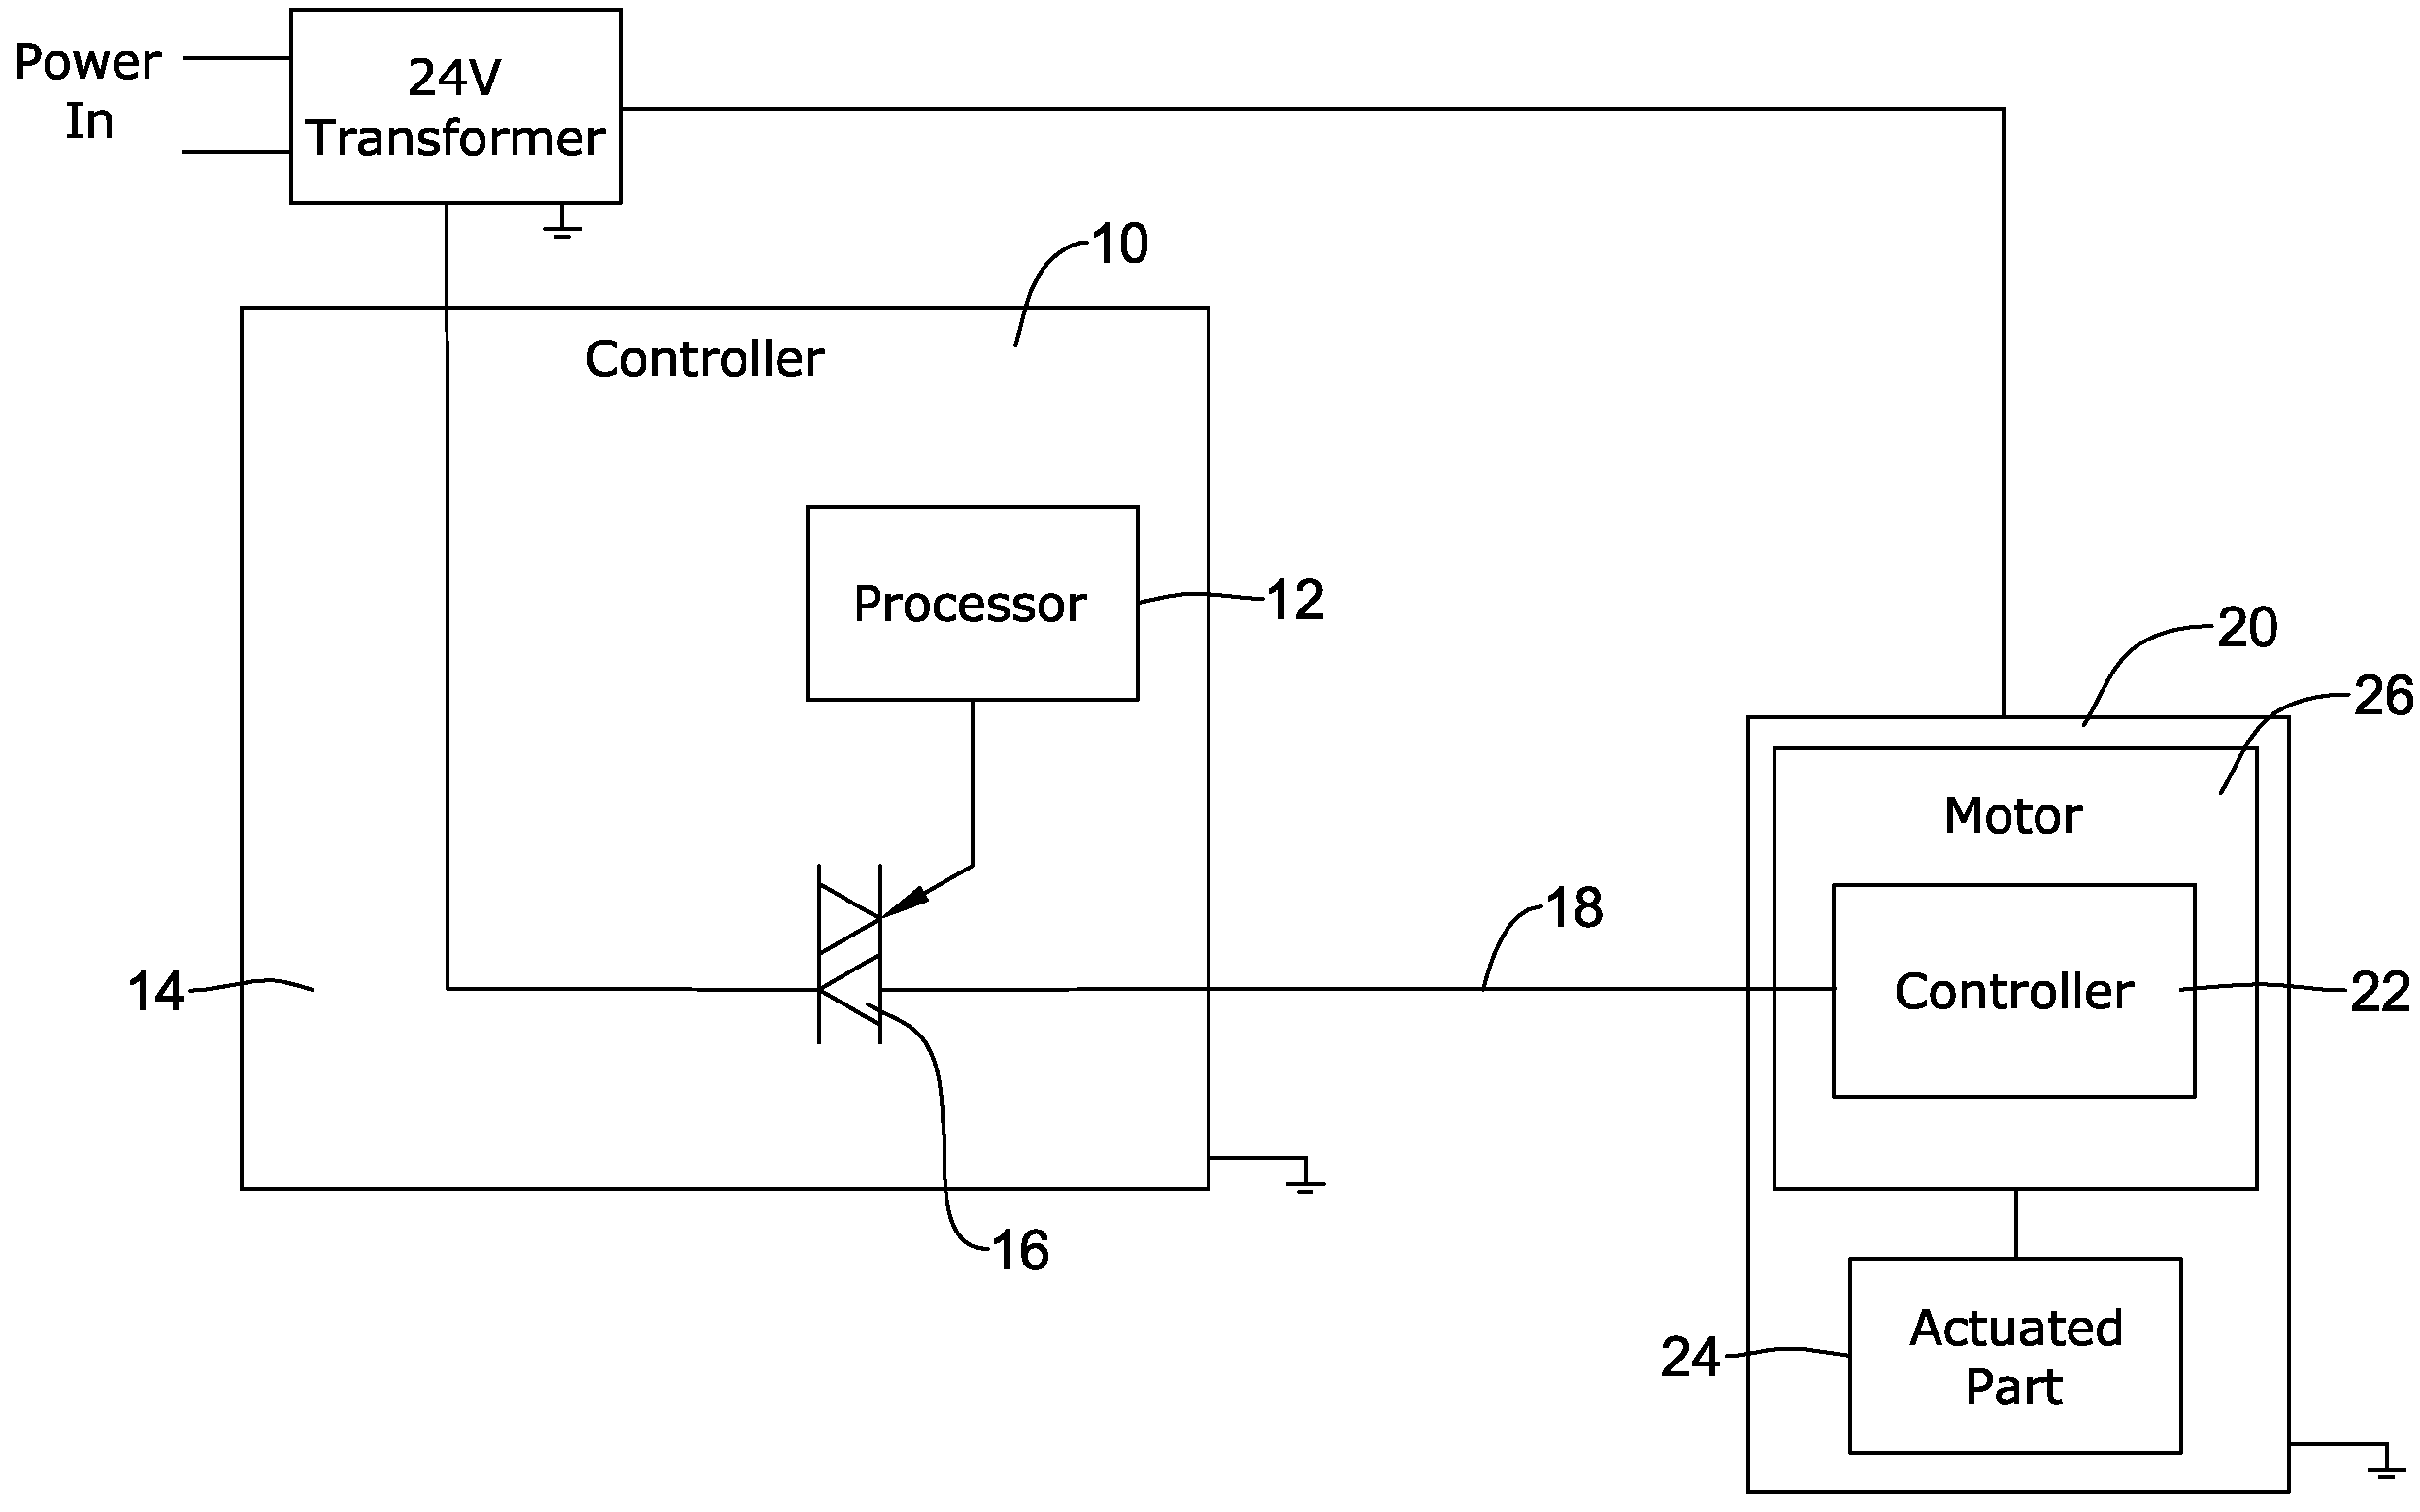 Single line control for HVAC actuator